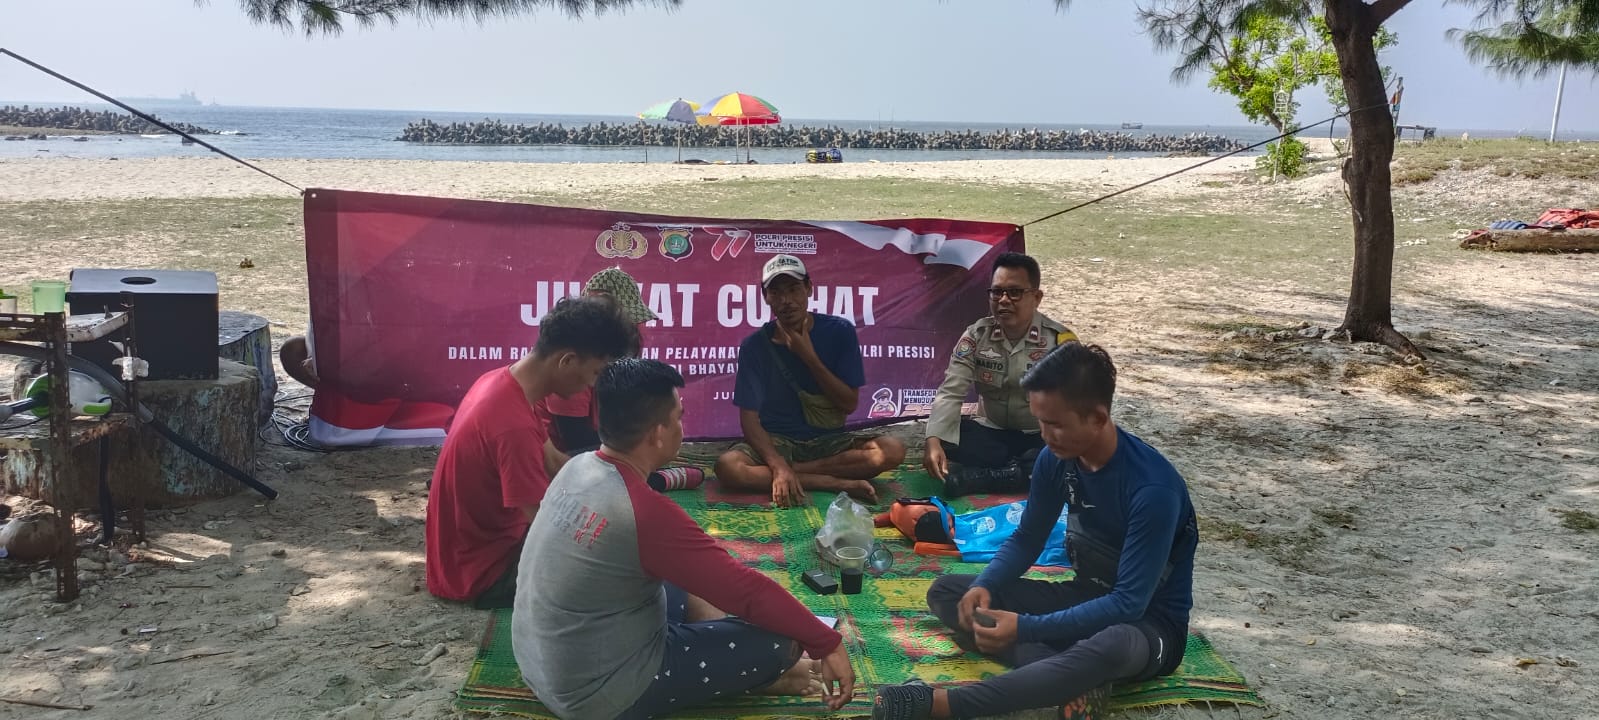 Bhabinkamtibmas Pulau Untung Jawa Sambangi Pemilik Jasa Wisata dalam Giat Jumat Curhat